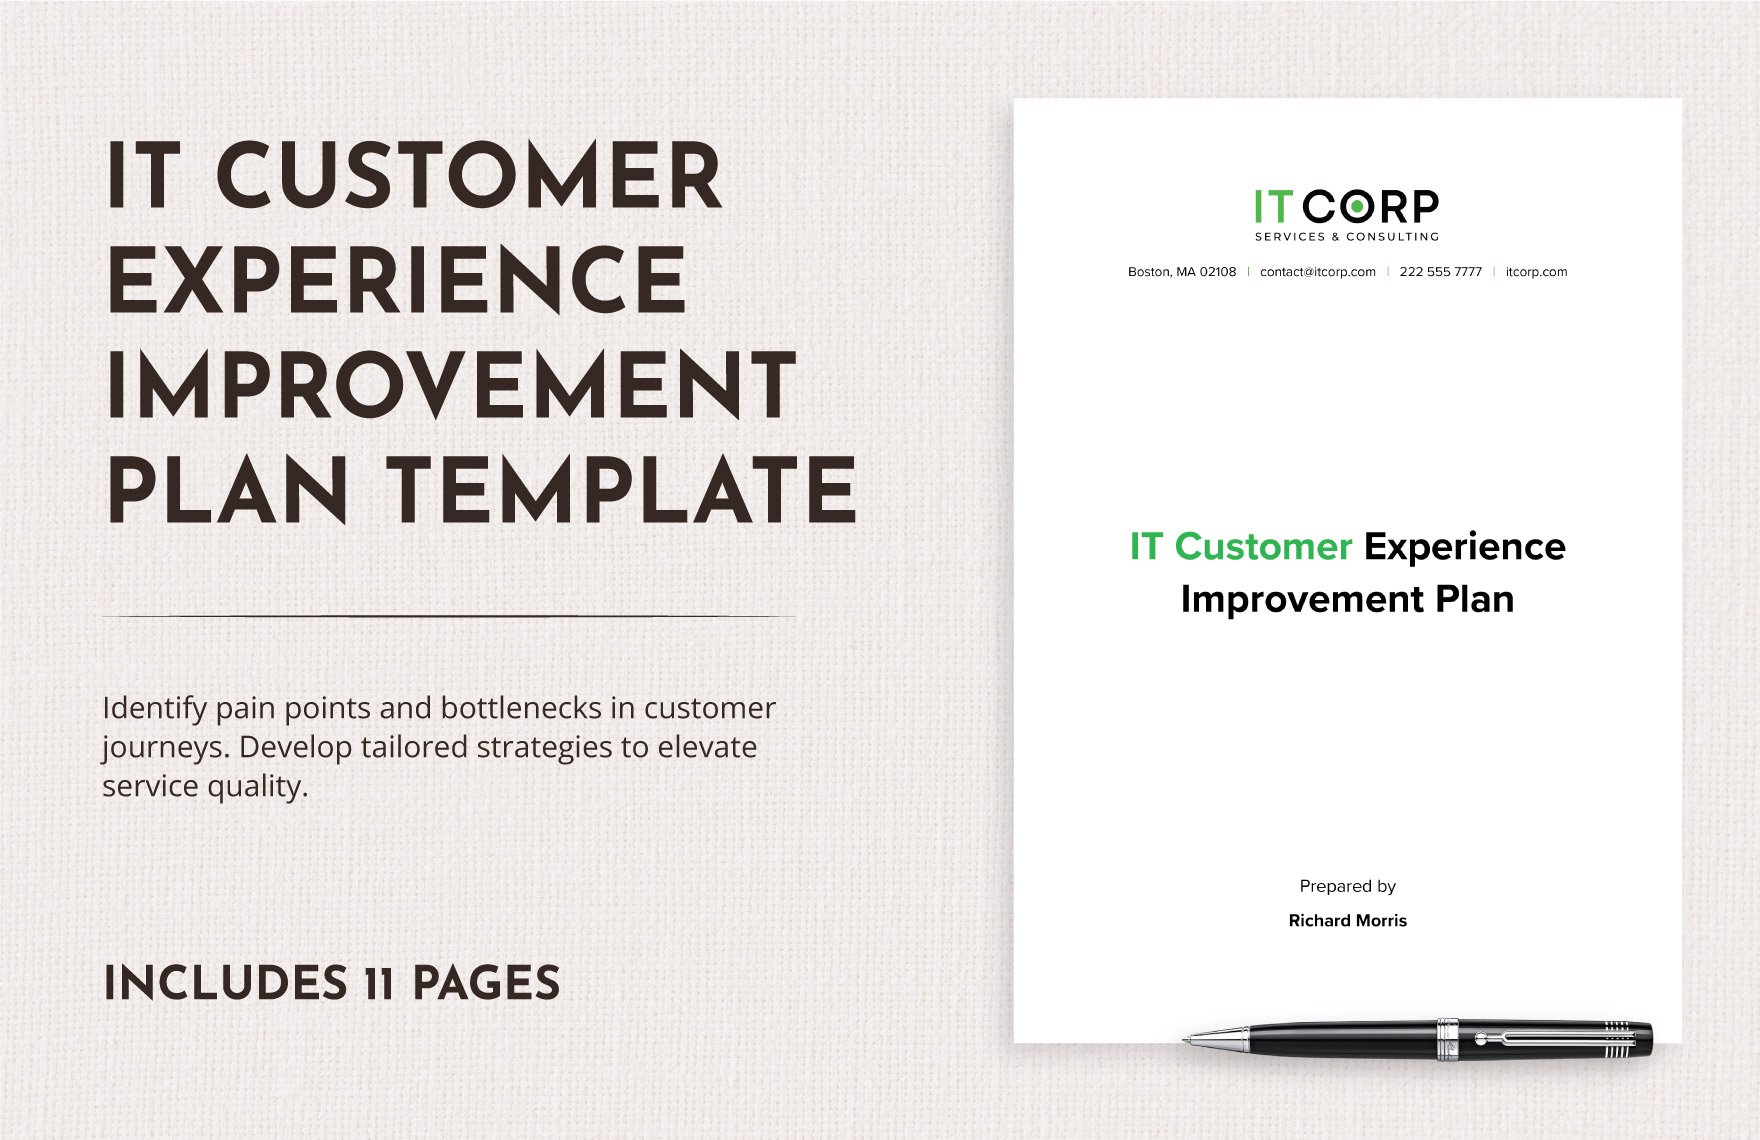 IT Customer Experience Improvement Plan Template